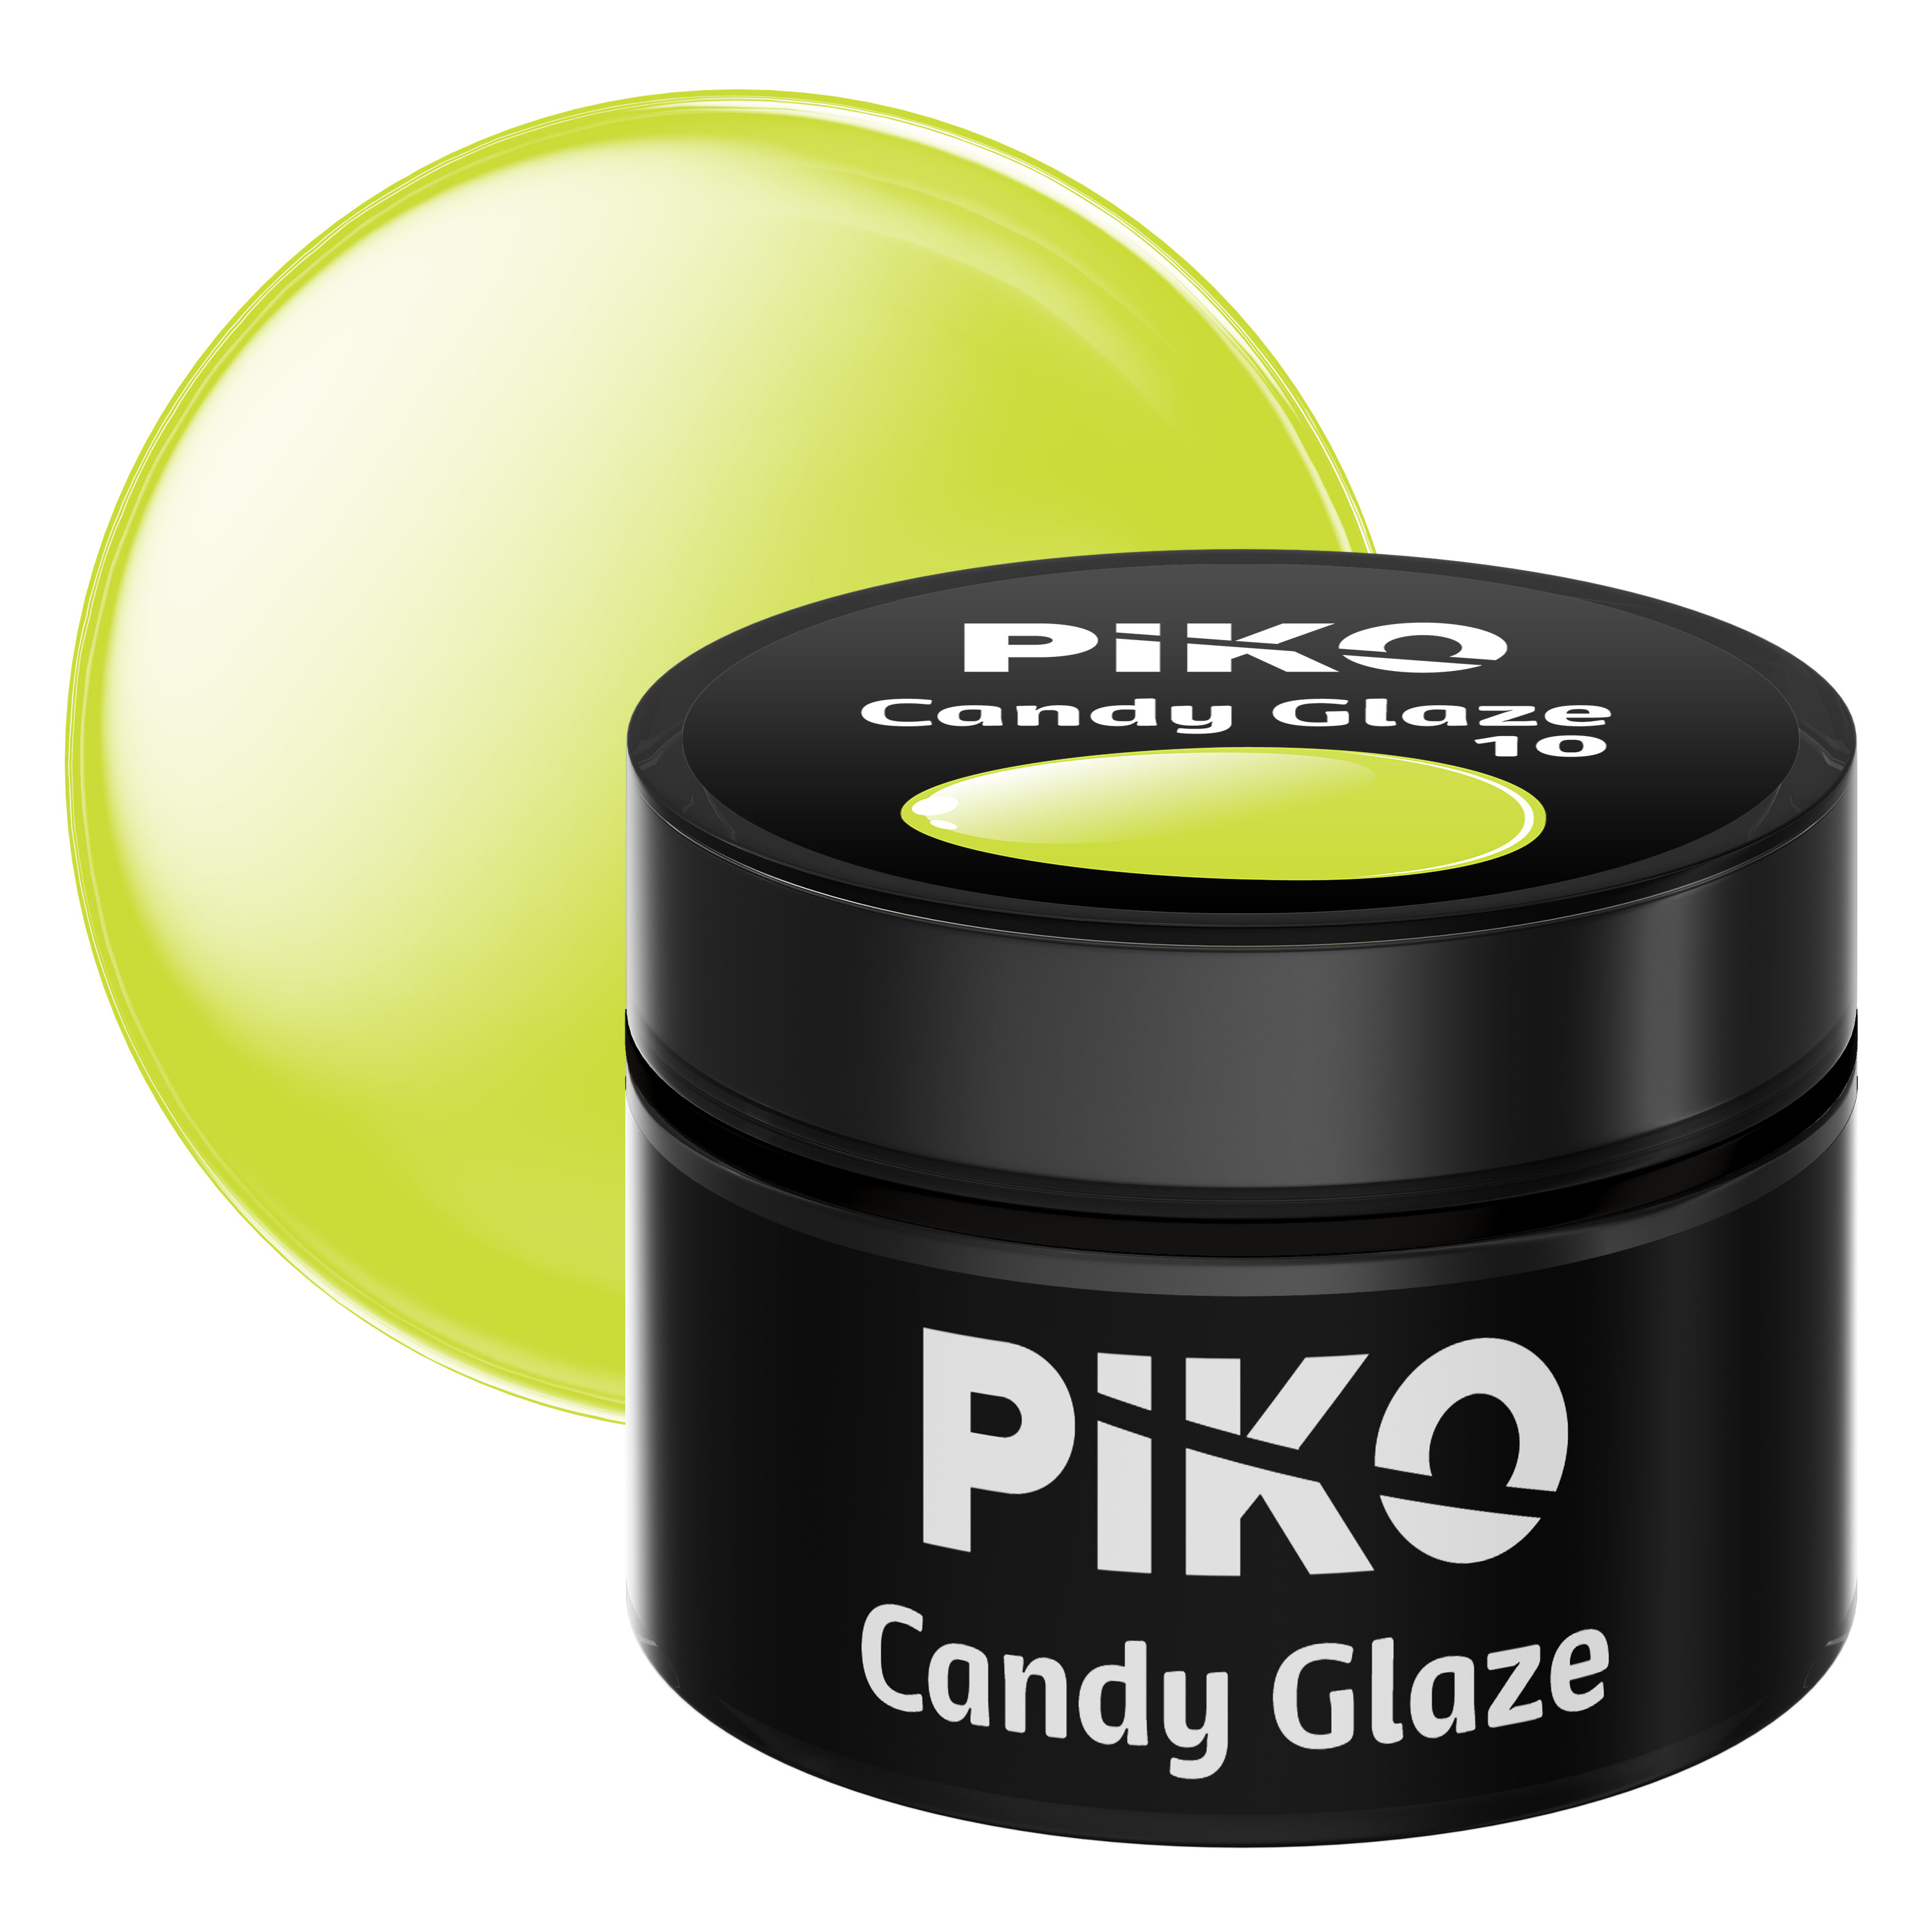 Gel UV color Piko, Candy Glaze, 5g, 10